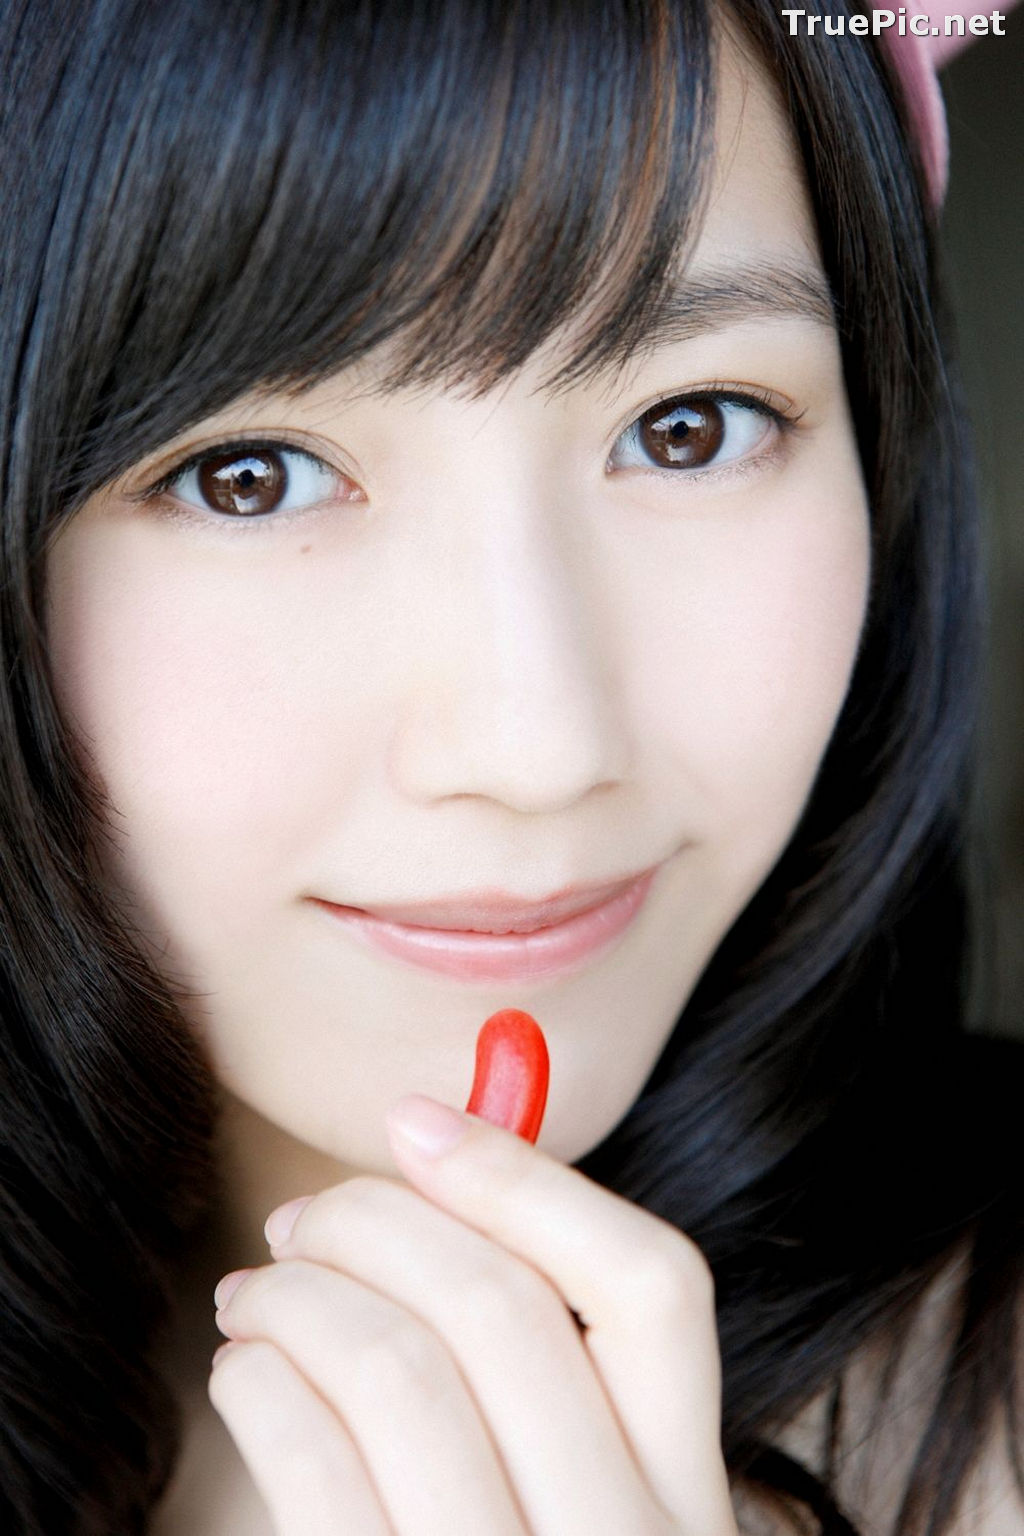 Image [YS Web] Vol.531 - Japanese Idol Girl Group (AKB48) - Mayu Watanabe - TruePic.net - Picture-58